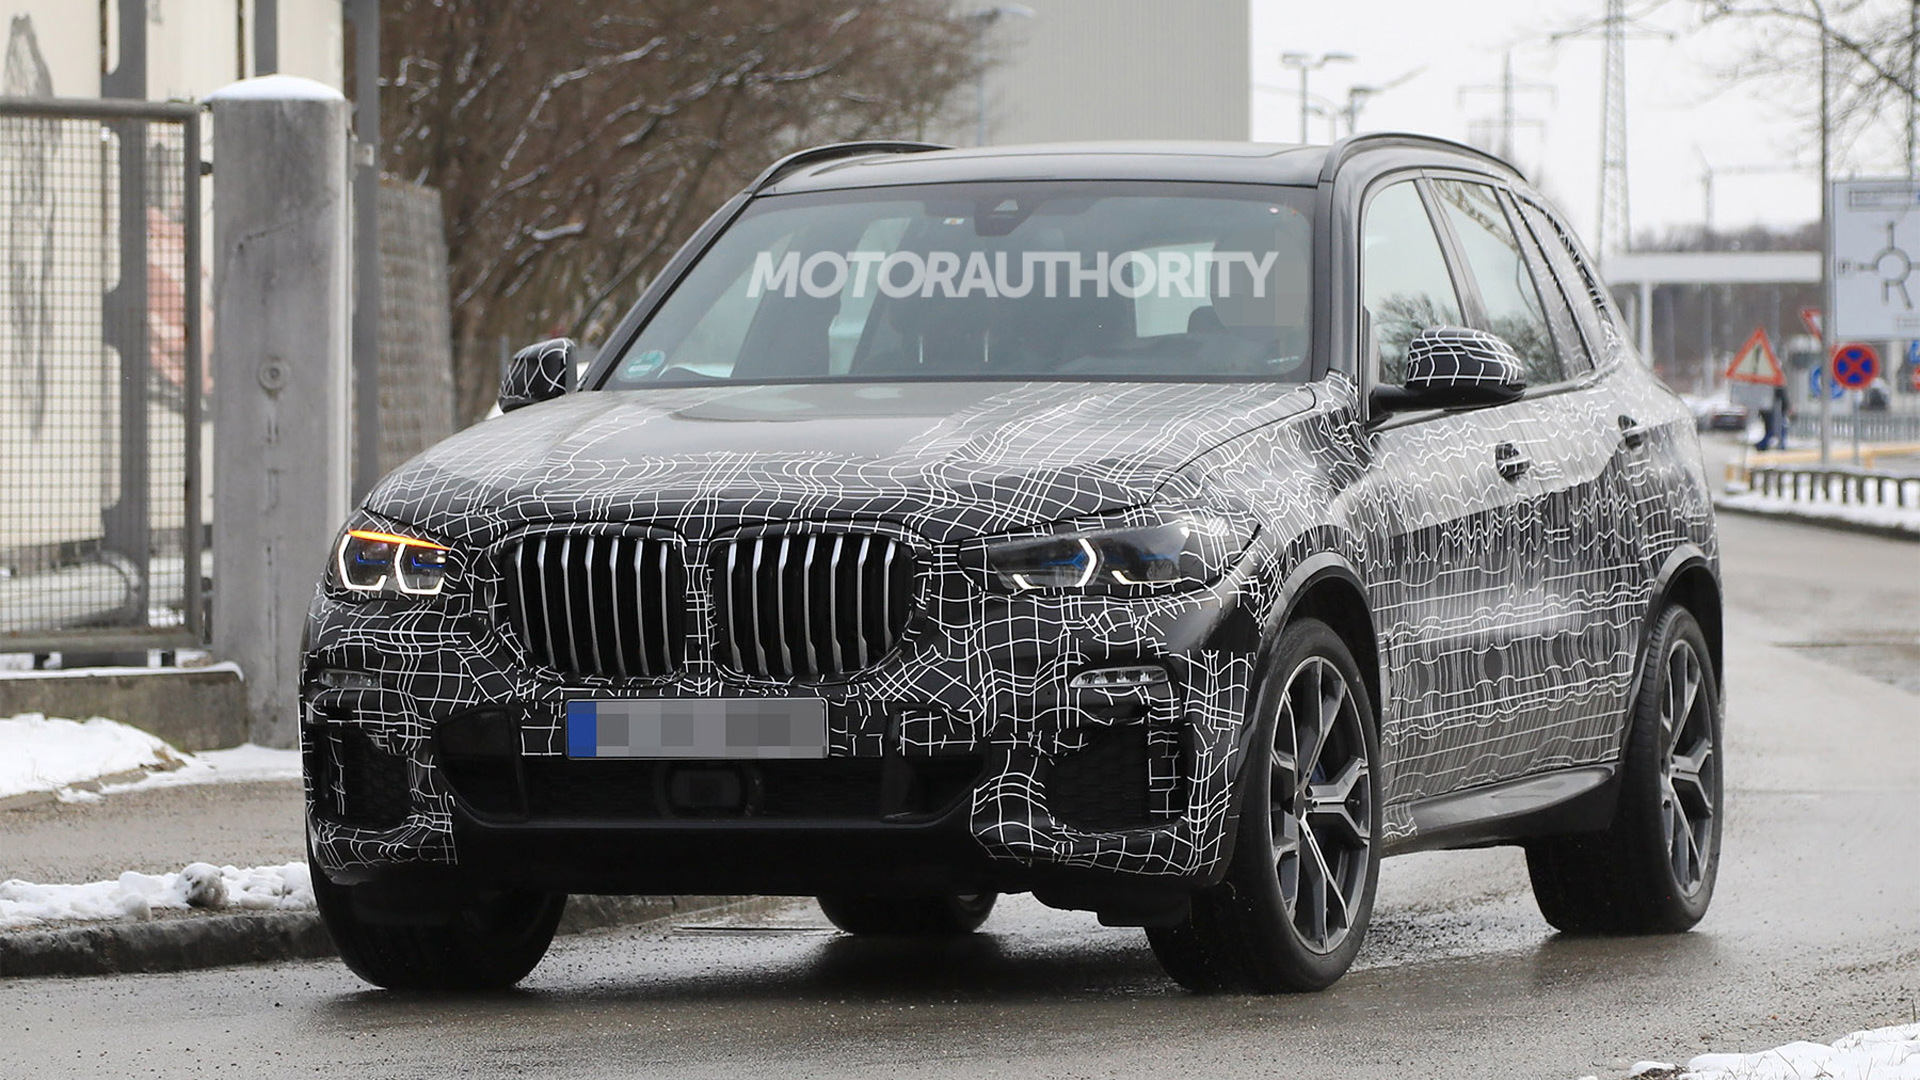 2019 BMW X5 spy shots - Image via S. Baldauf/SB-Medien